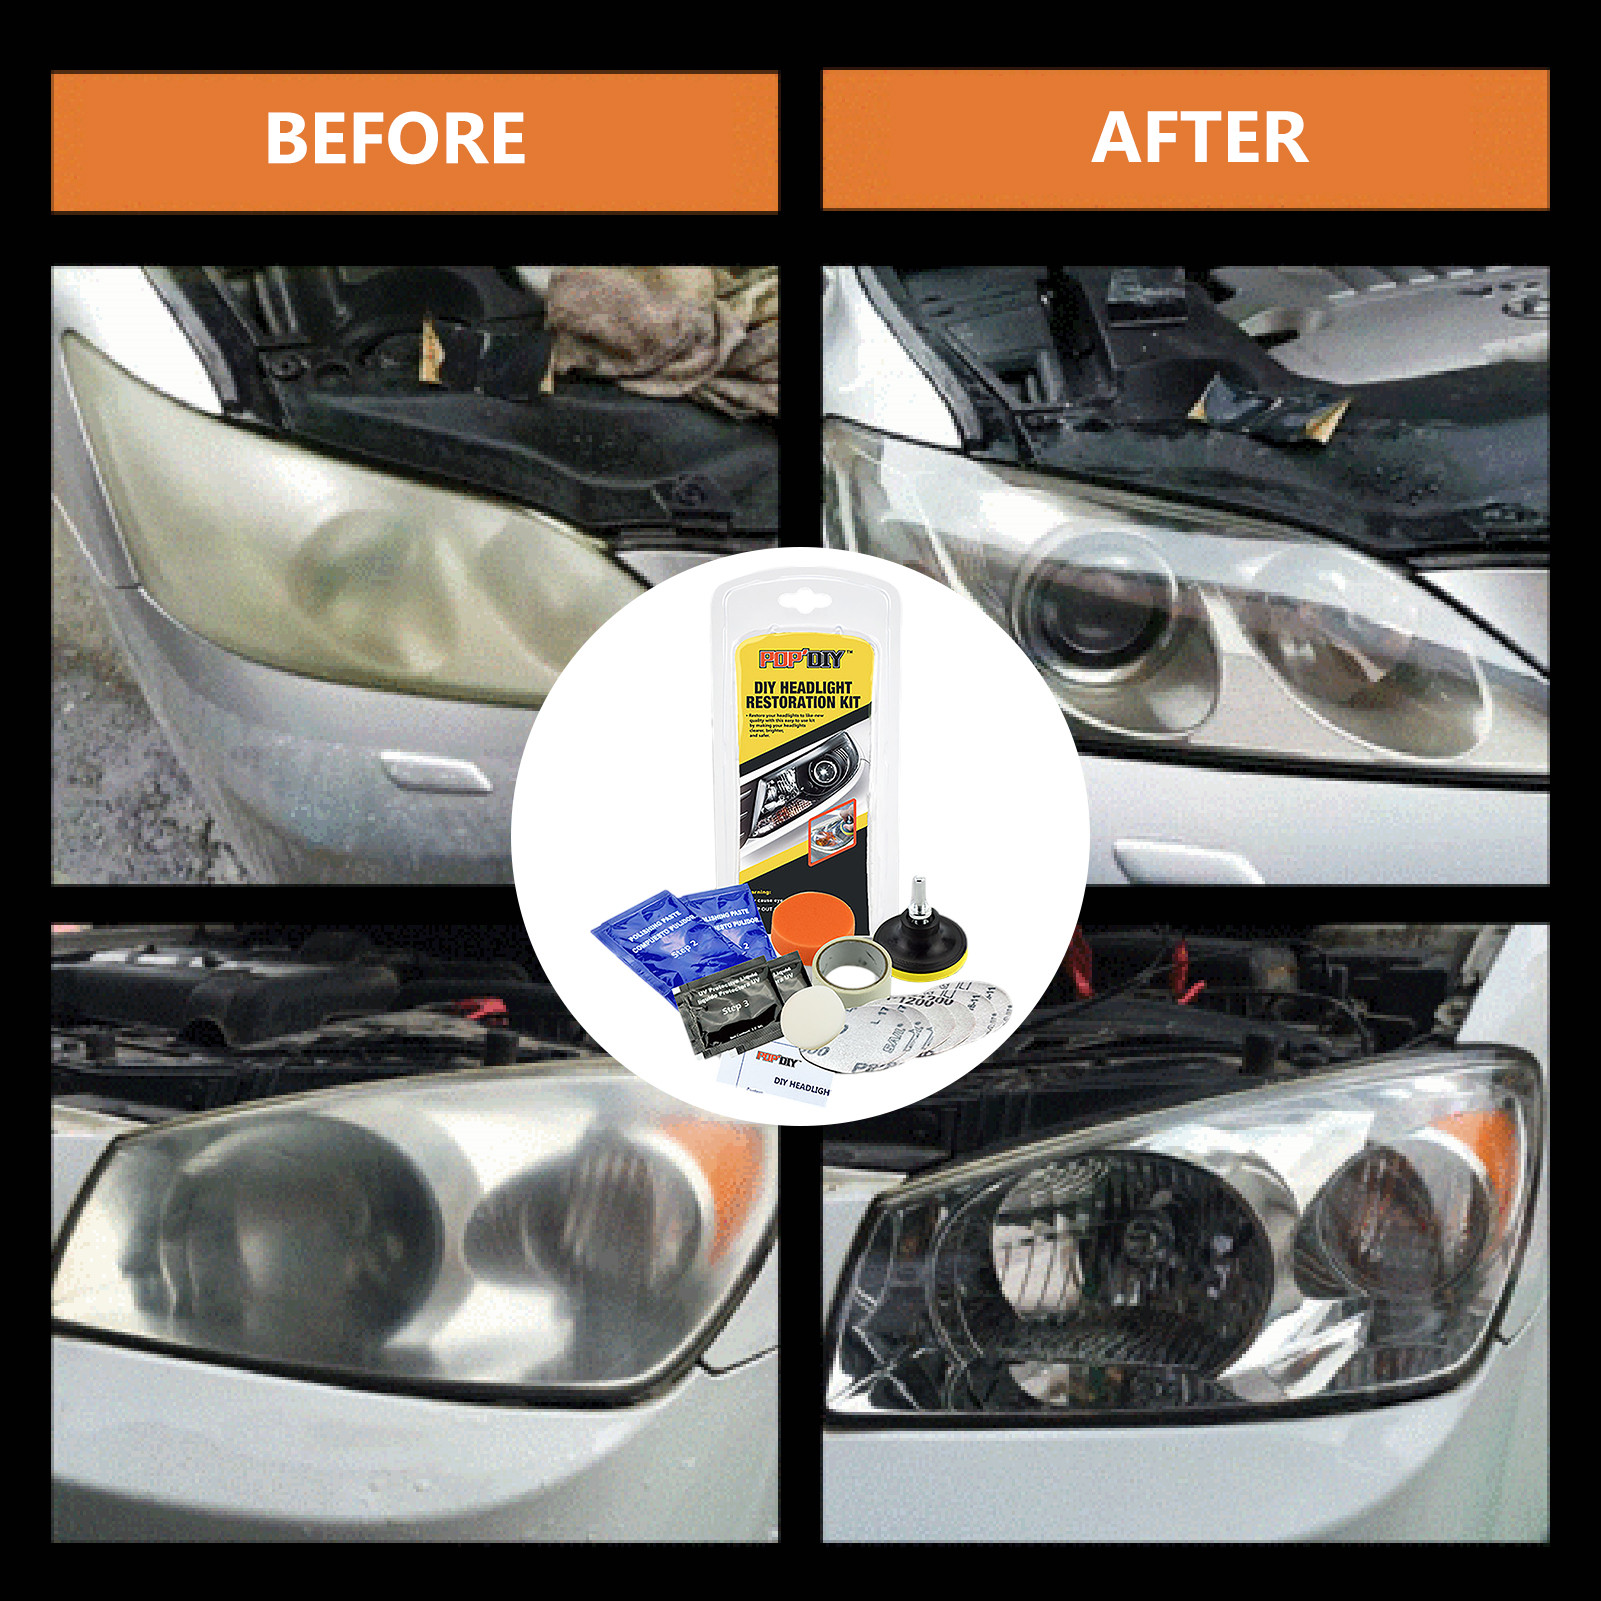  AUTOXBERT Kit de restauración de faros de coche, abrillantador,  reparación de arañazos, pasta líquida, pulidora de lentes de luz,  herramienta de reparación de pasta de limpieza : Automotriz